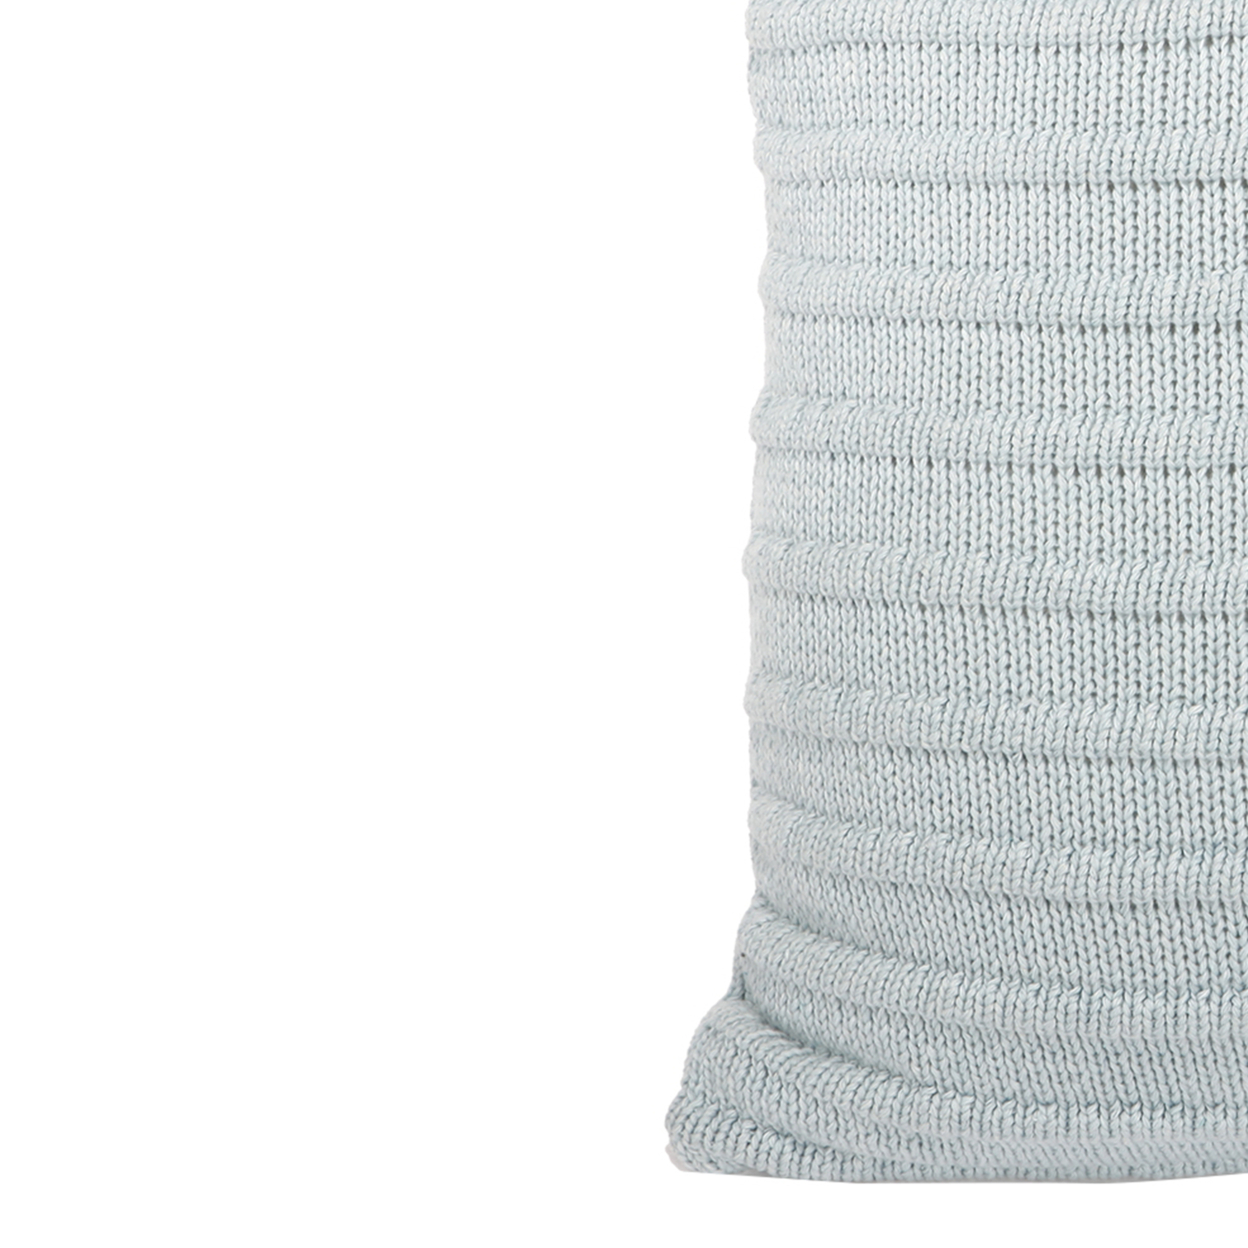 18 X 18 Inch Contemporary Style Polyester Woven Pillow, Set Of 2, Blue- Saltoro Sherpi